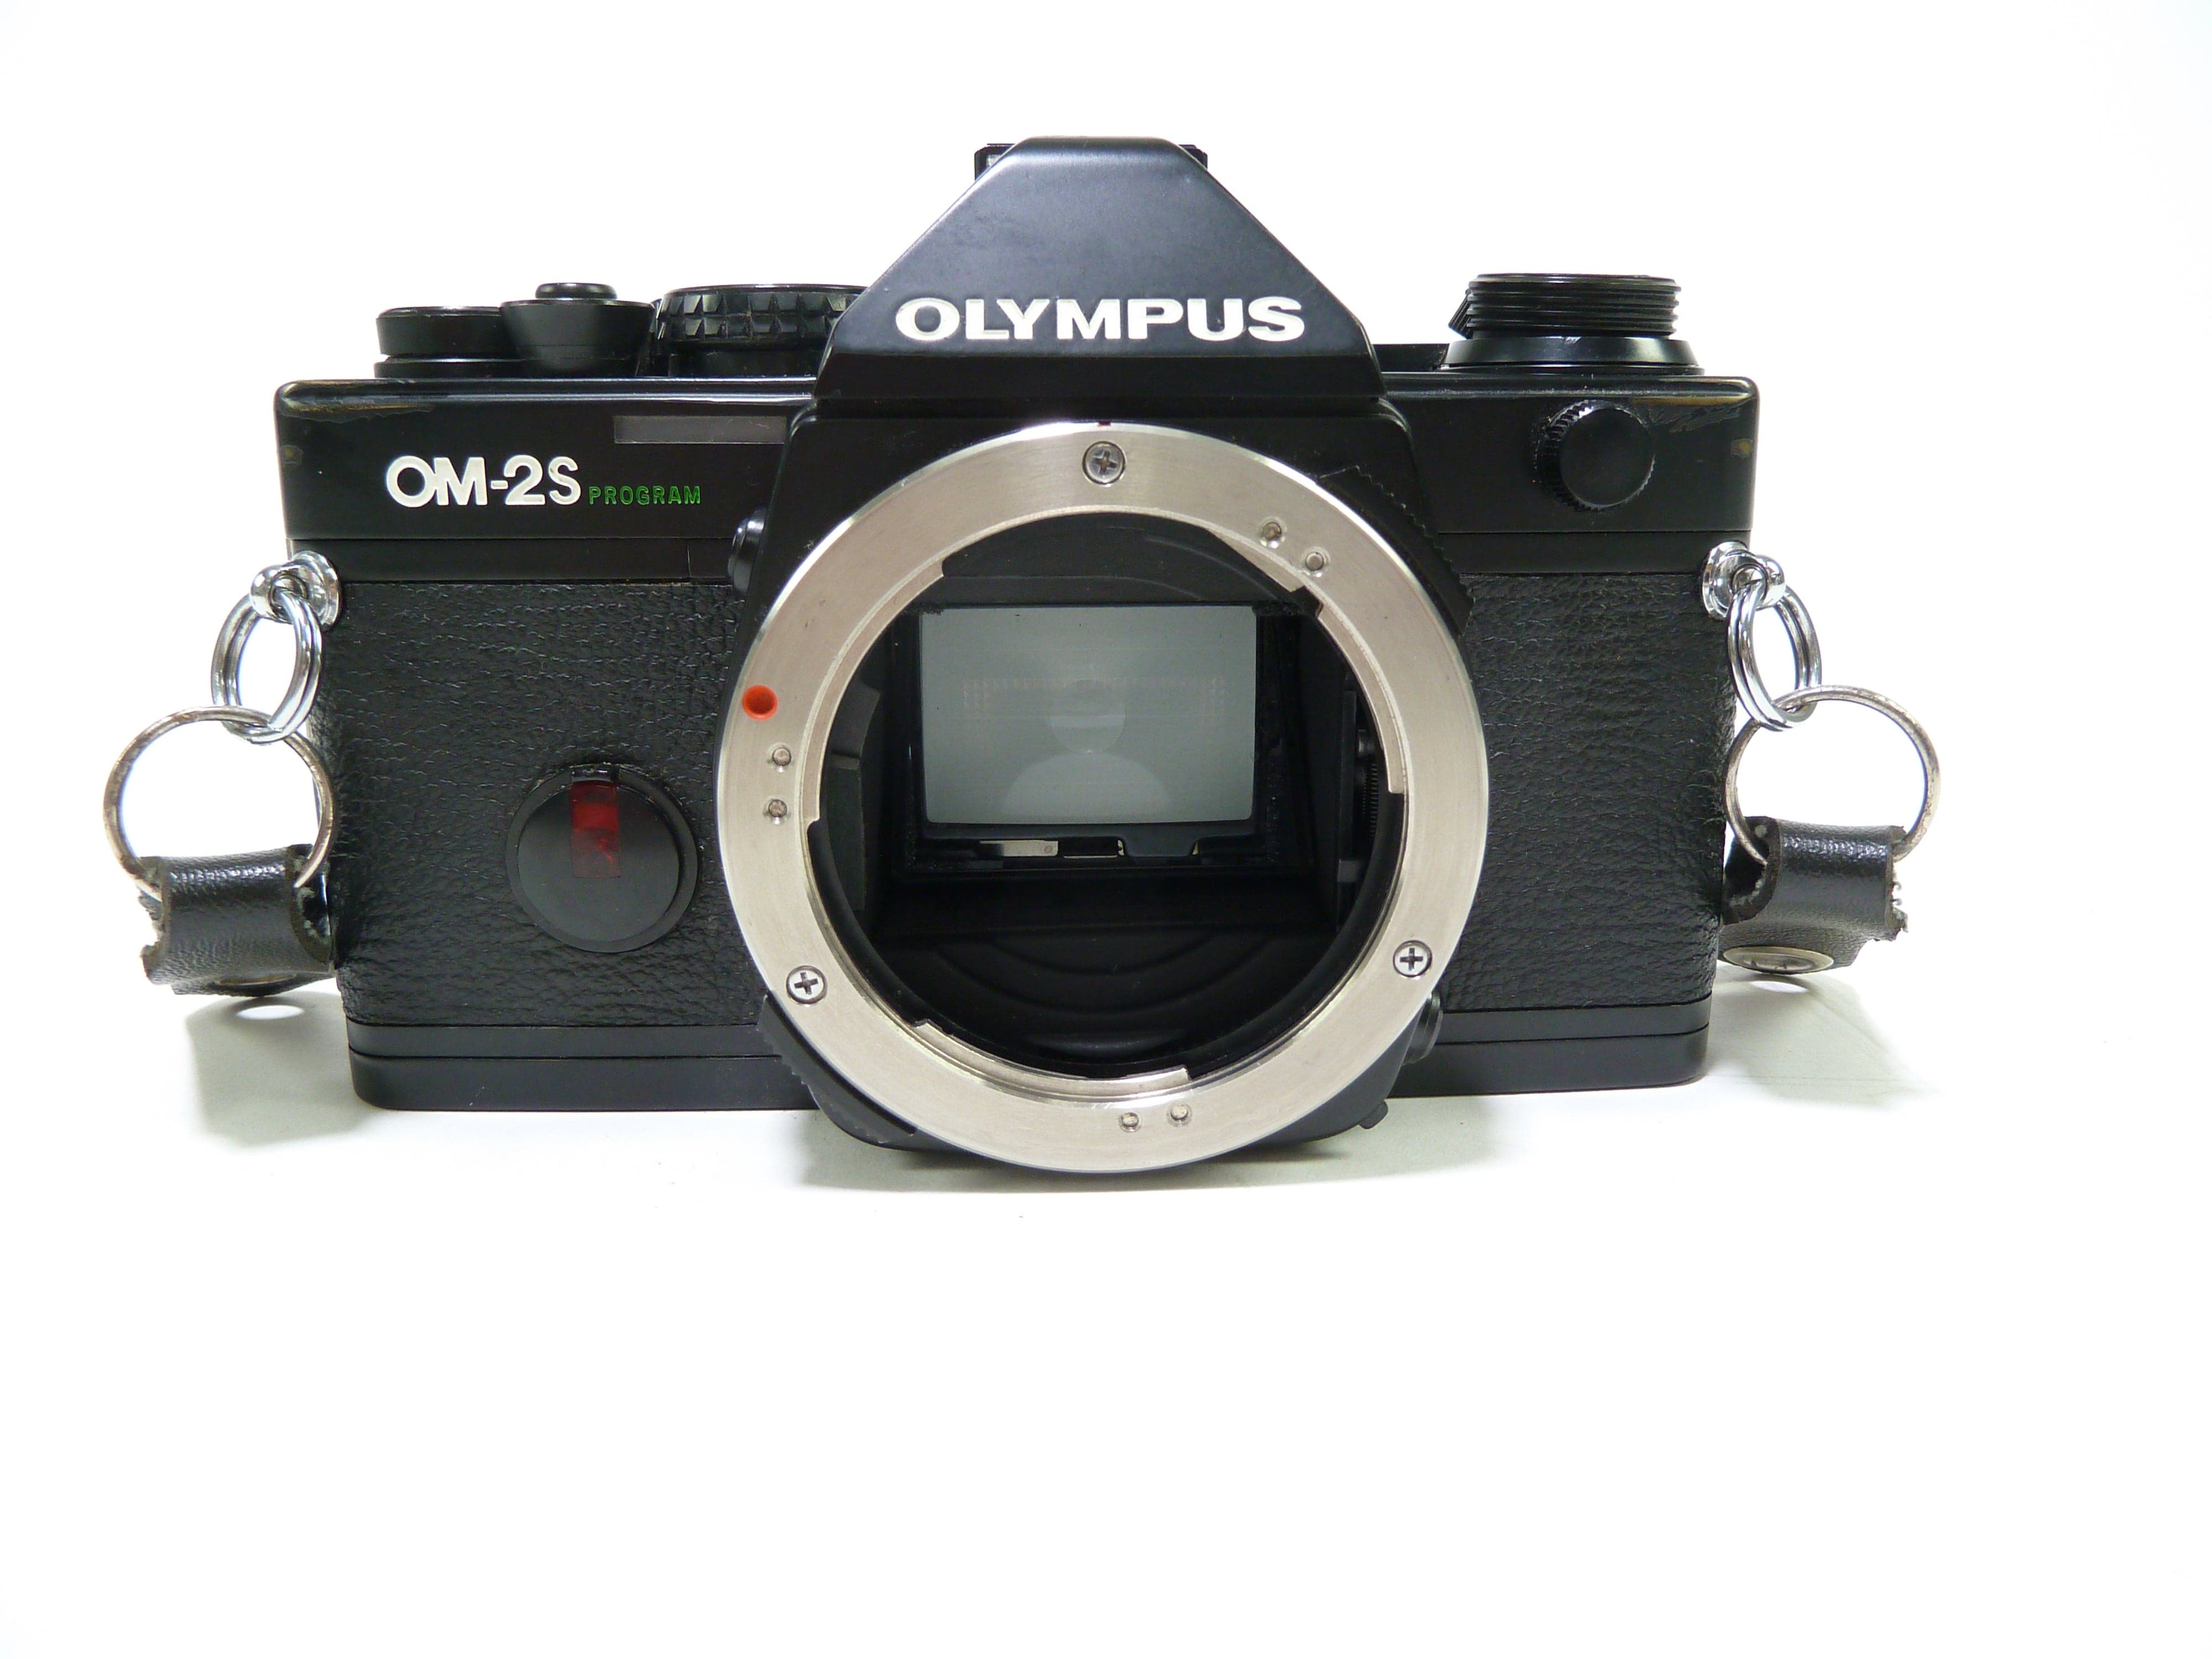 Olympus OM25 Program SLR 35mm Film Camera with an Olympus 50mm f/1.8 Leans  and an Olympus Winder 2 Grip